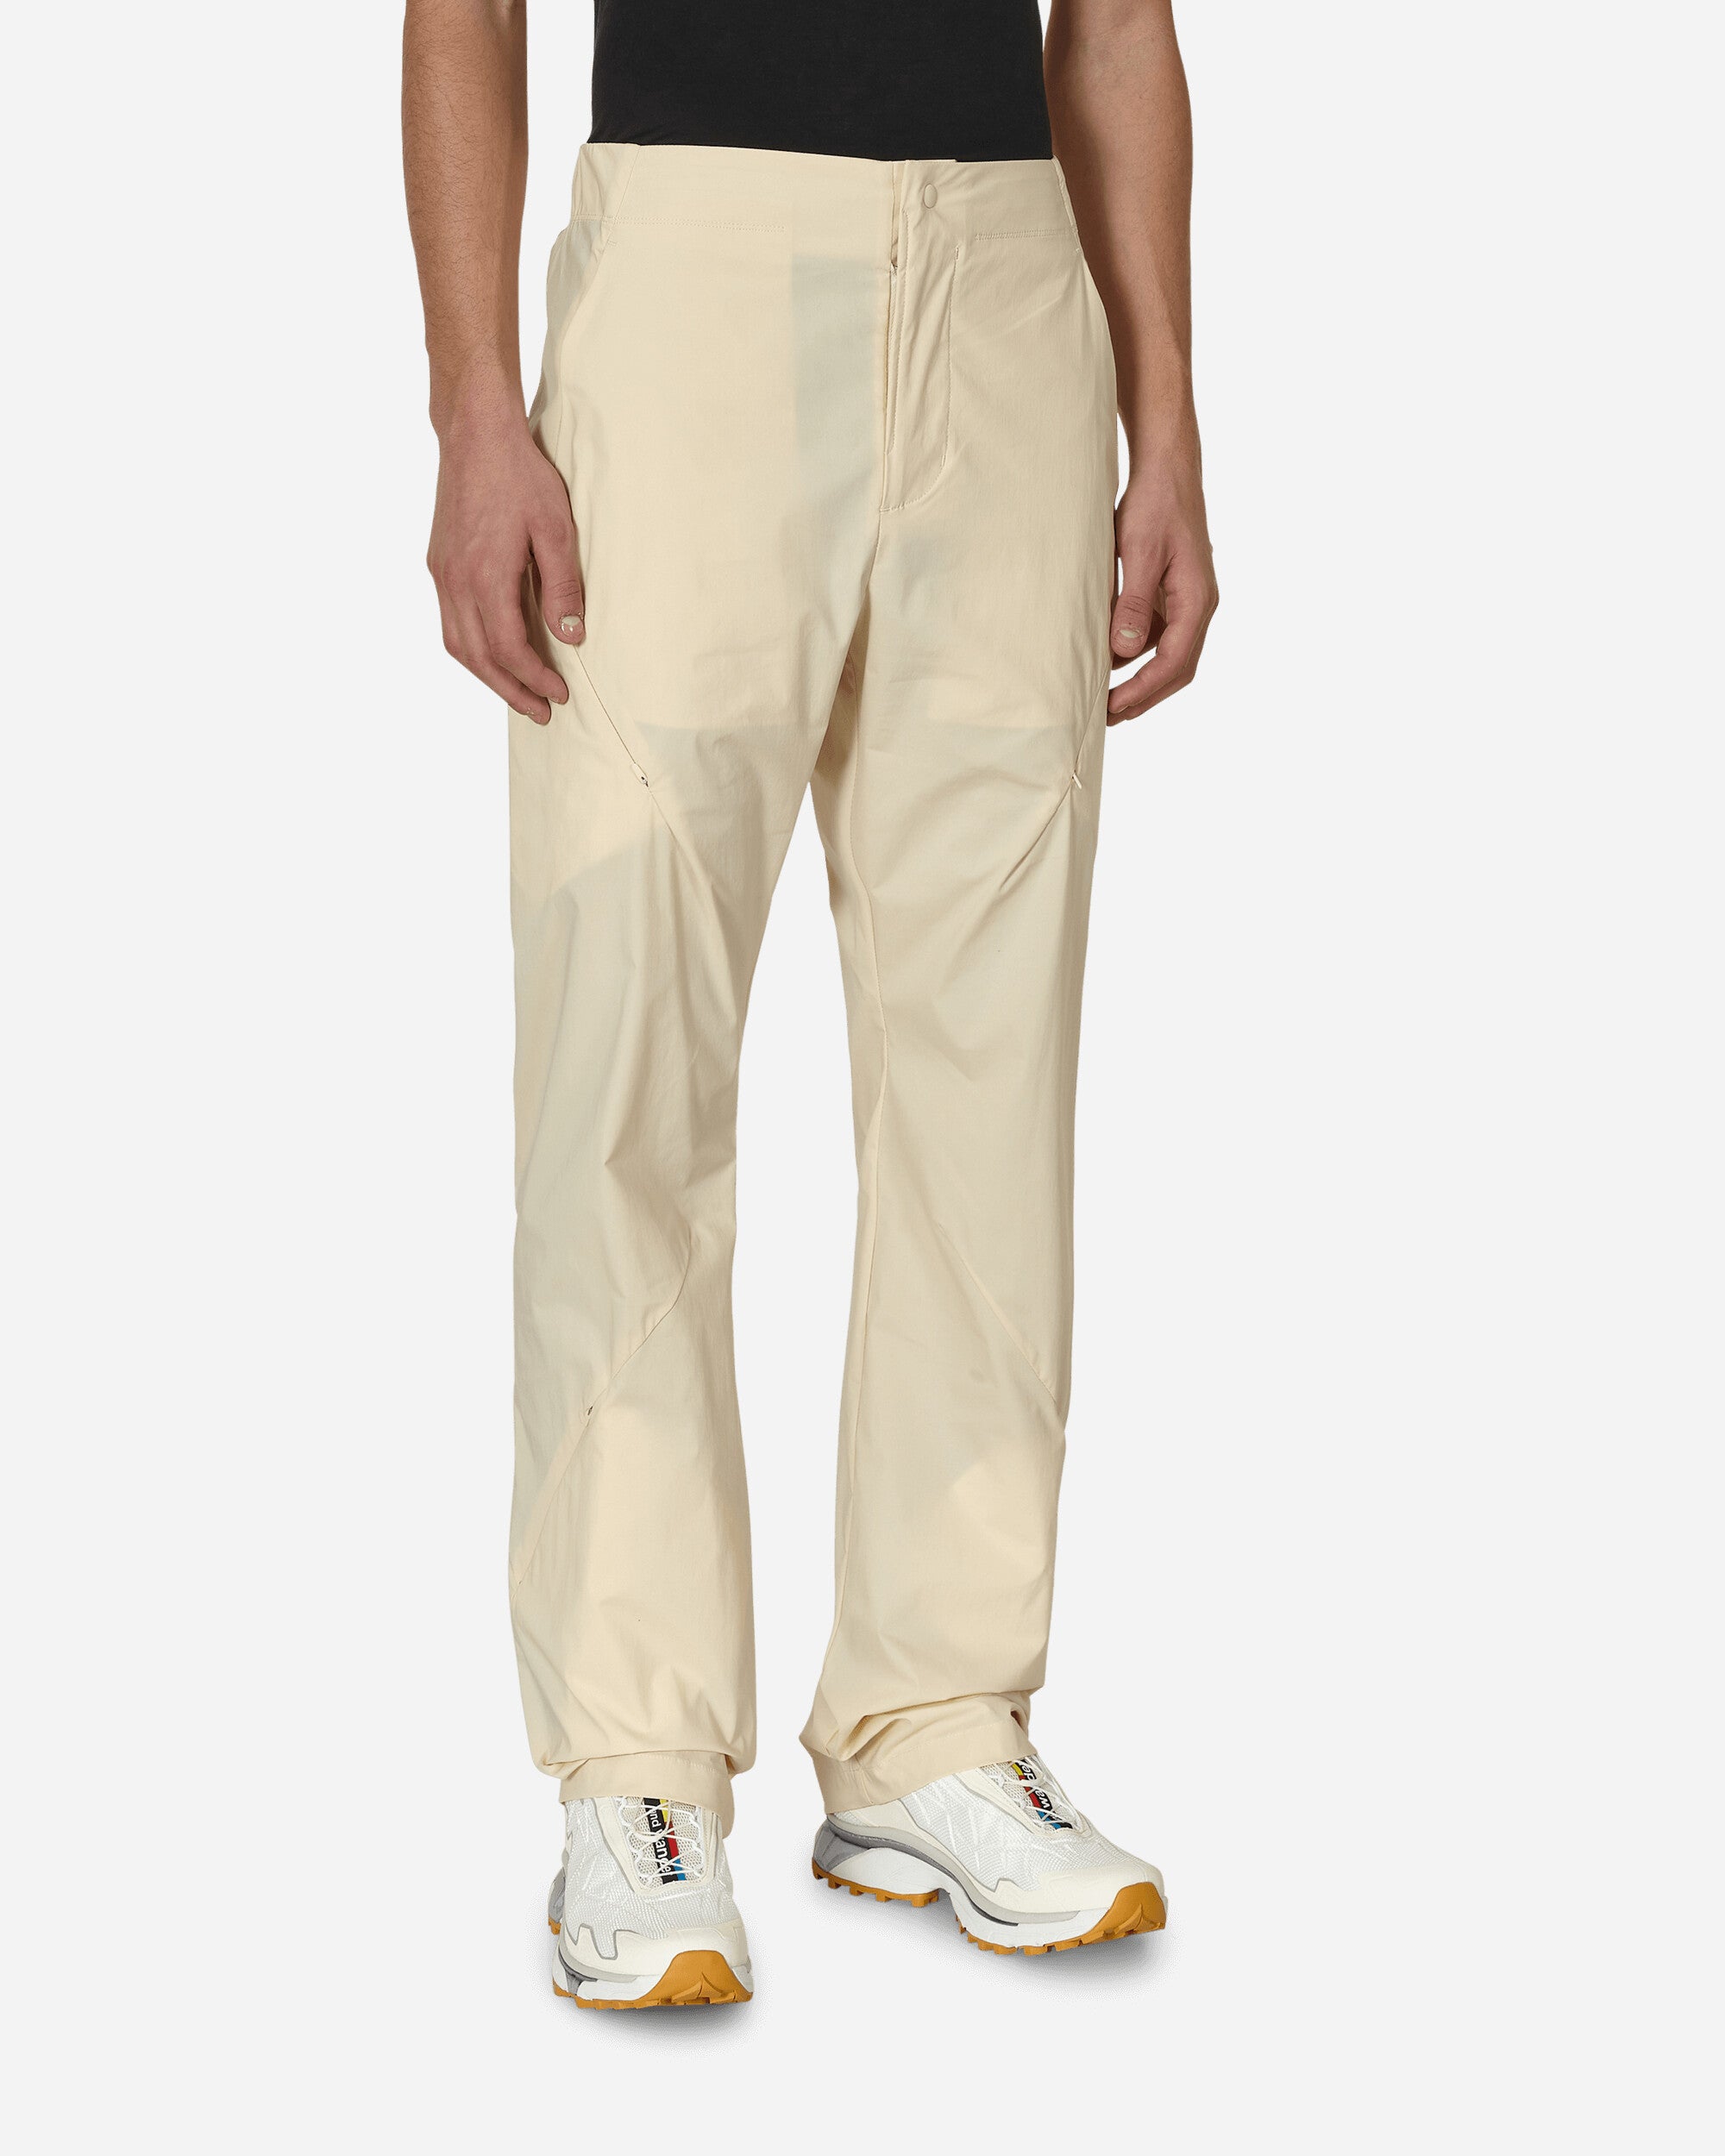 Buy Greg Norman Men's 4-Way Stretch Tech Trousers